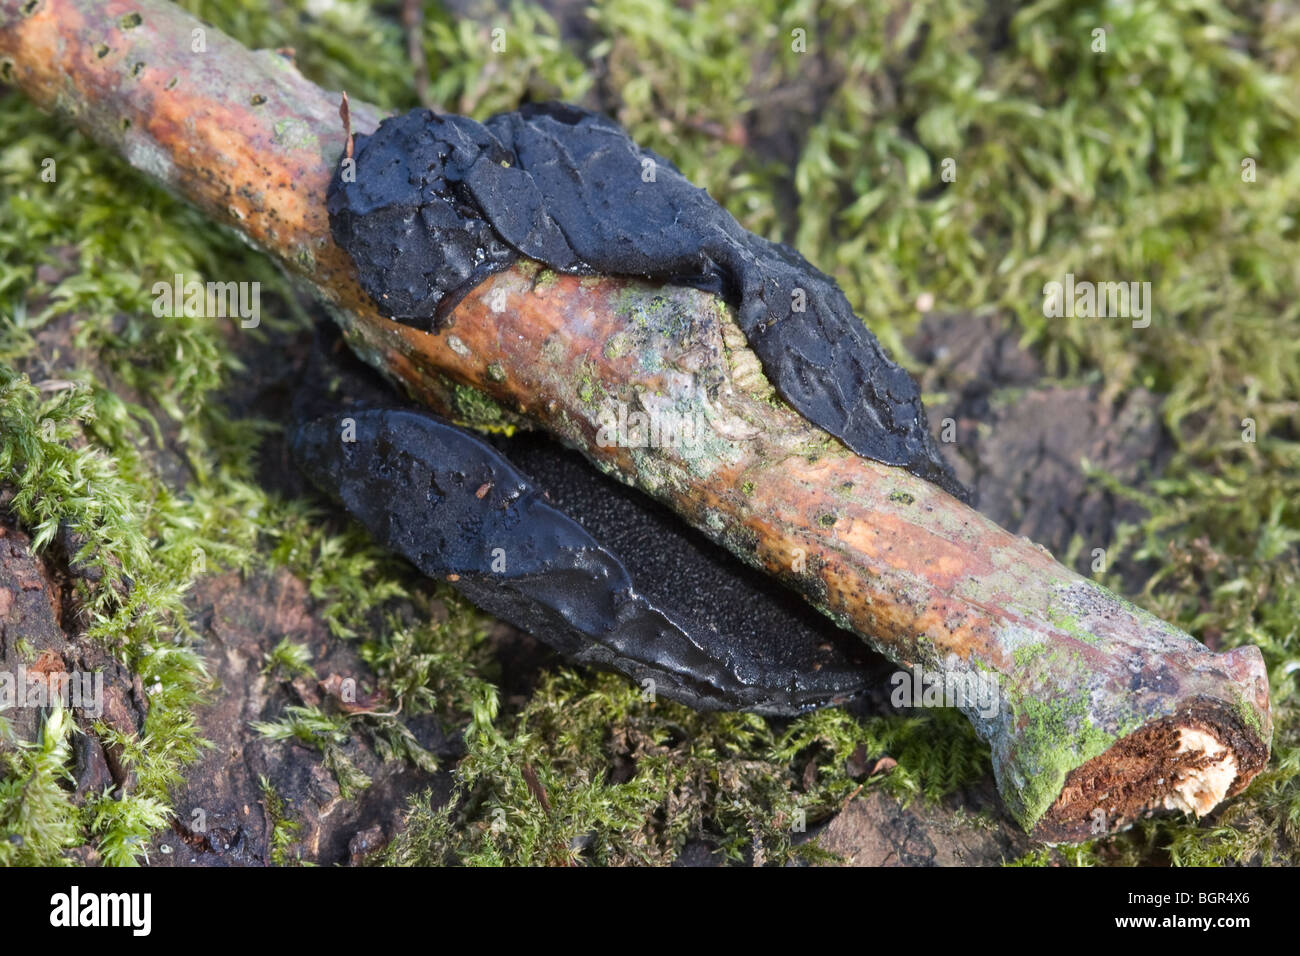 Witches' Butter fungi, exidia glandulosa, growing around a stick Stock Photo